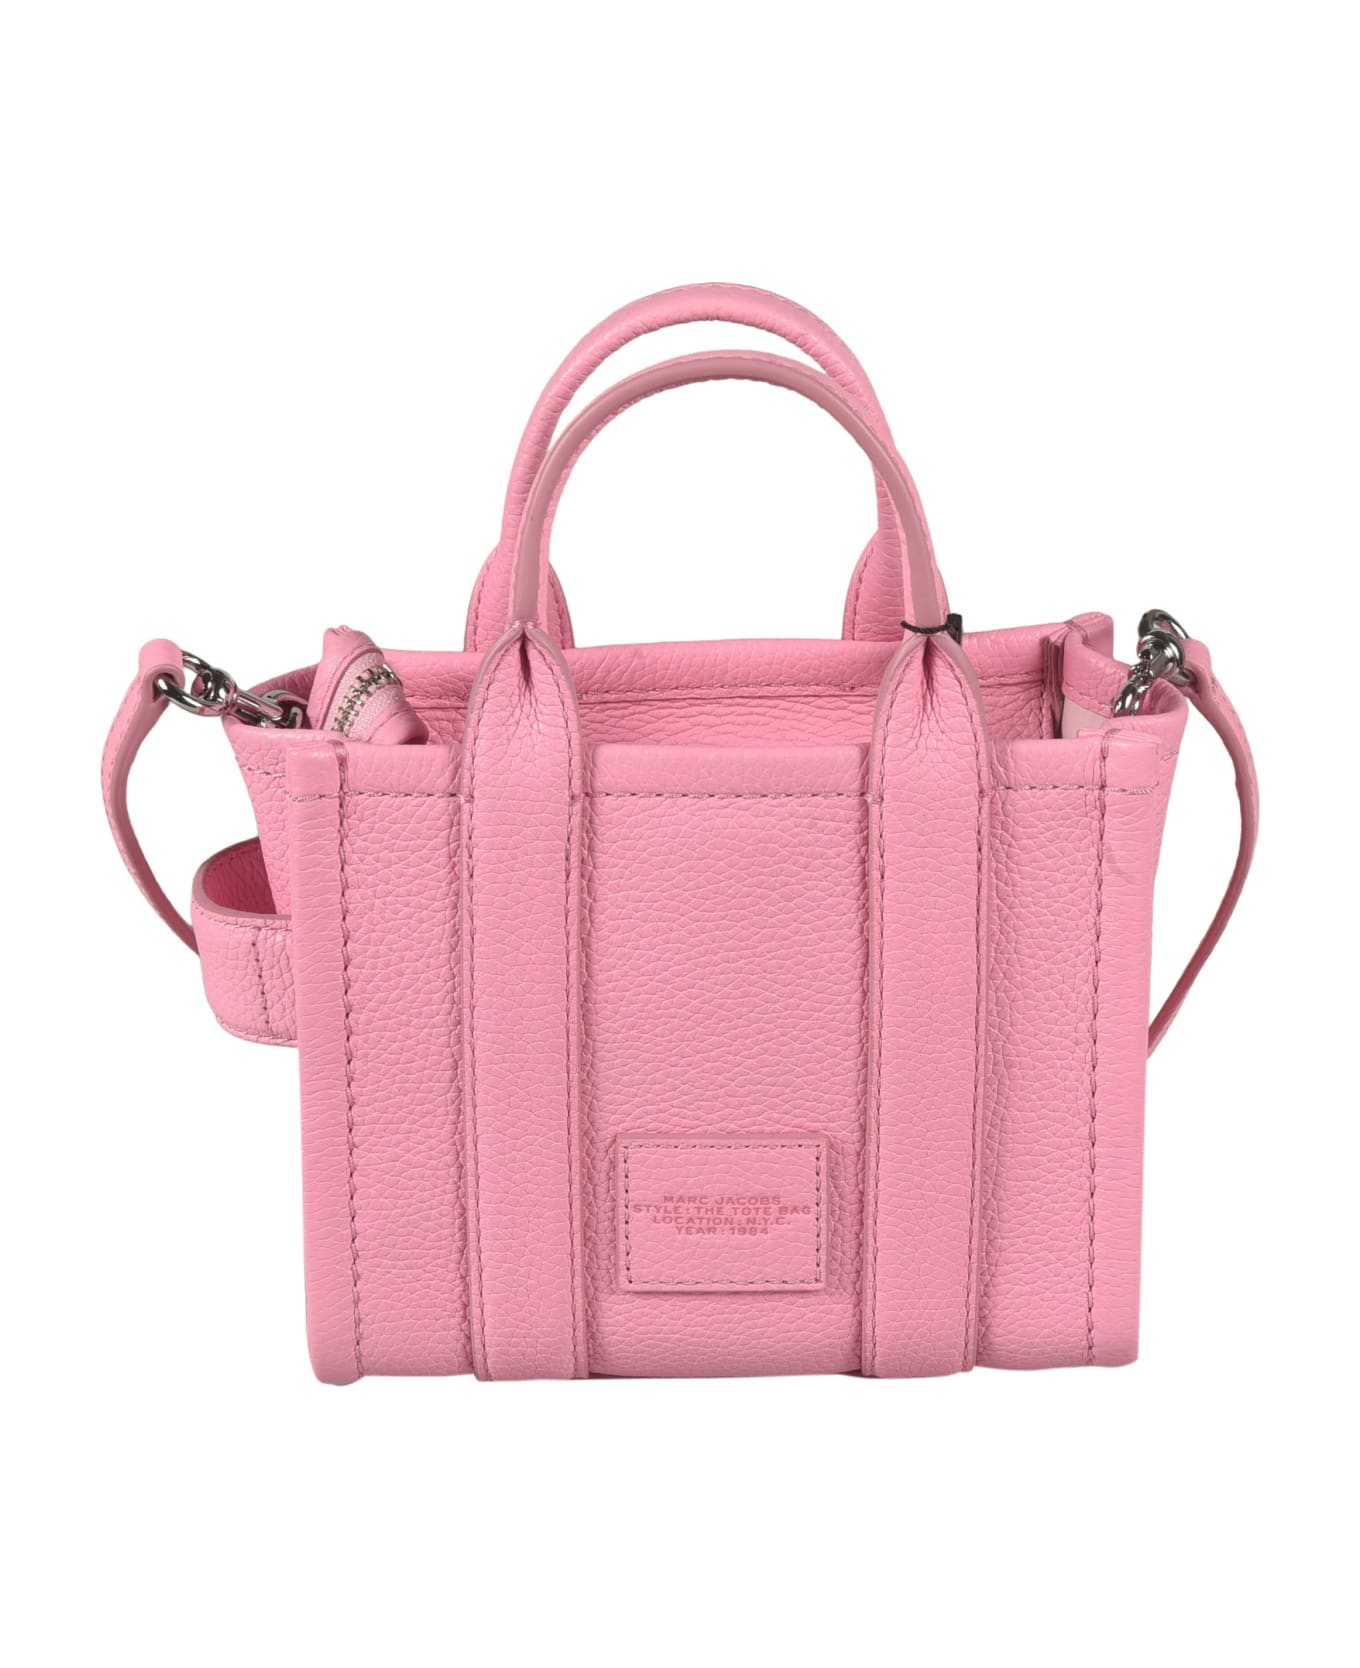 Marc Jacobs The Mini Tote Bag - Pink